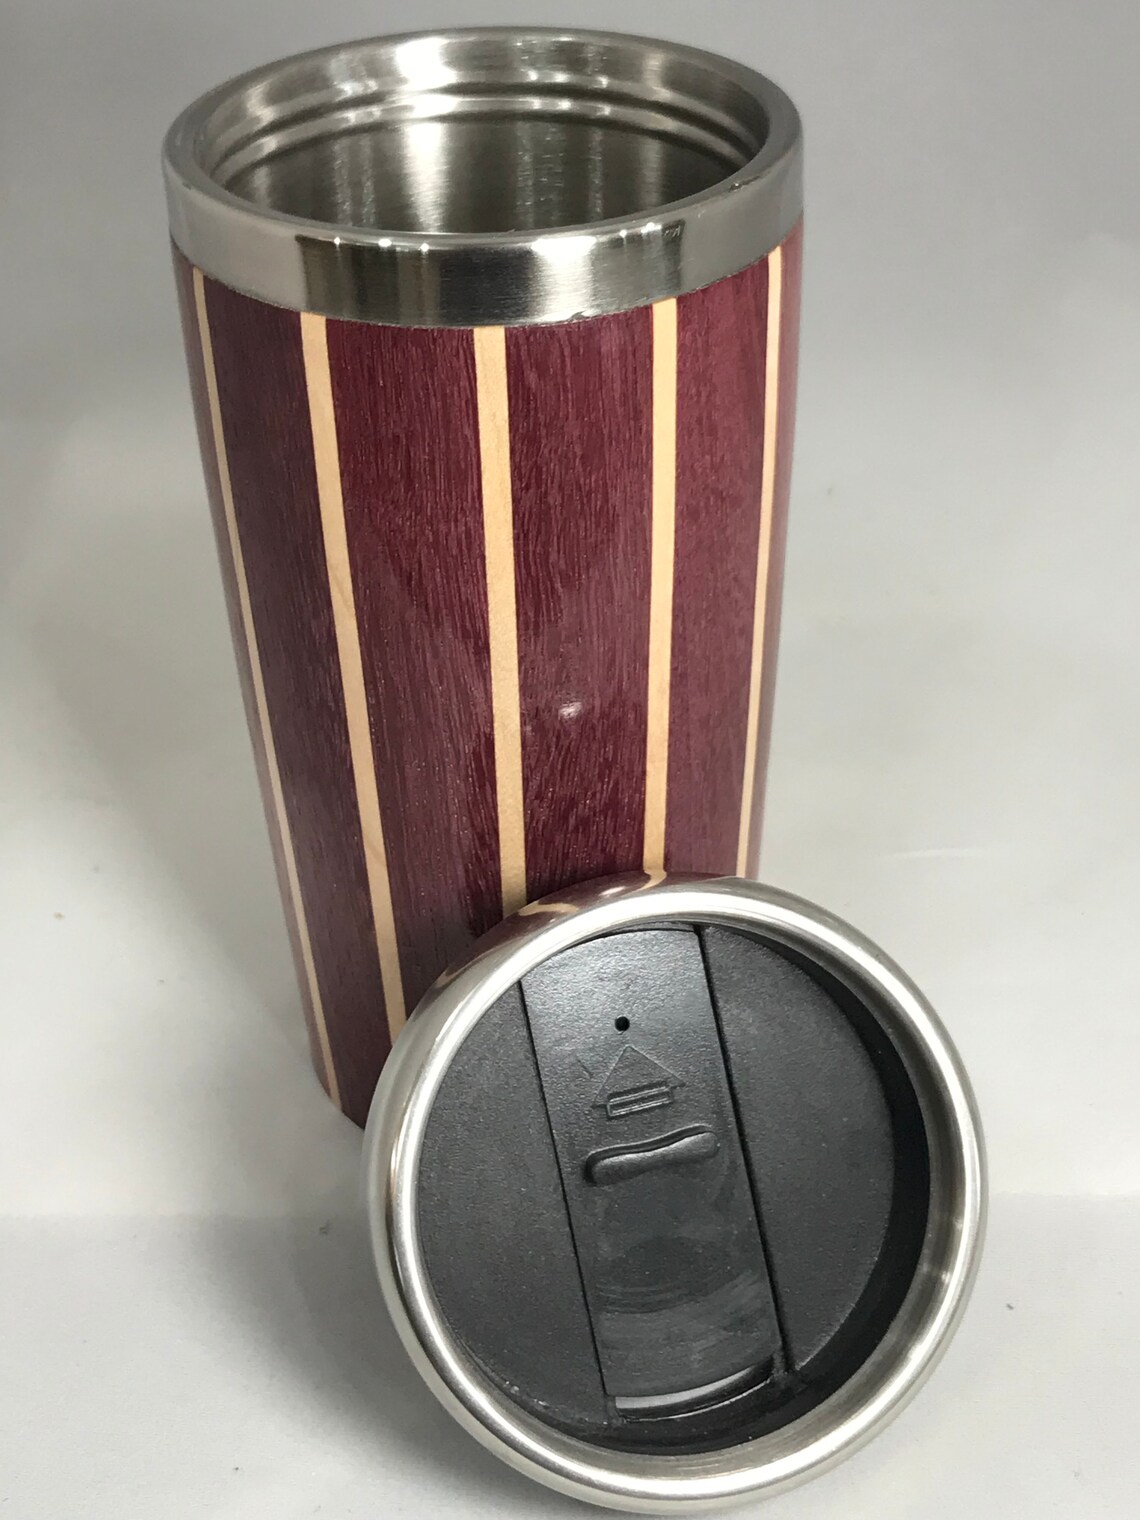 travel coffee mug wooden lid